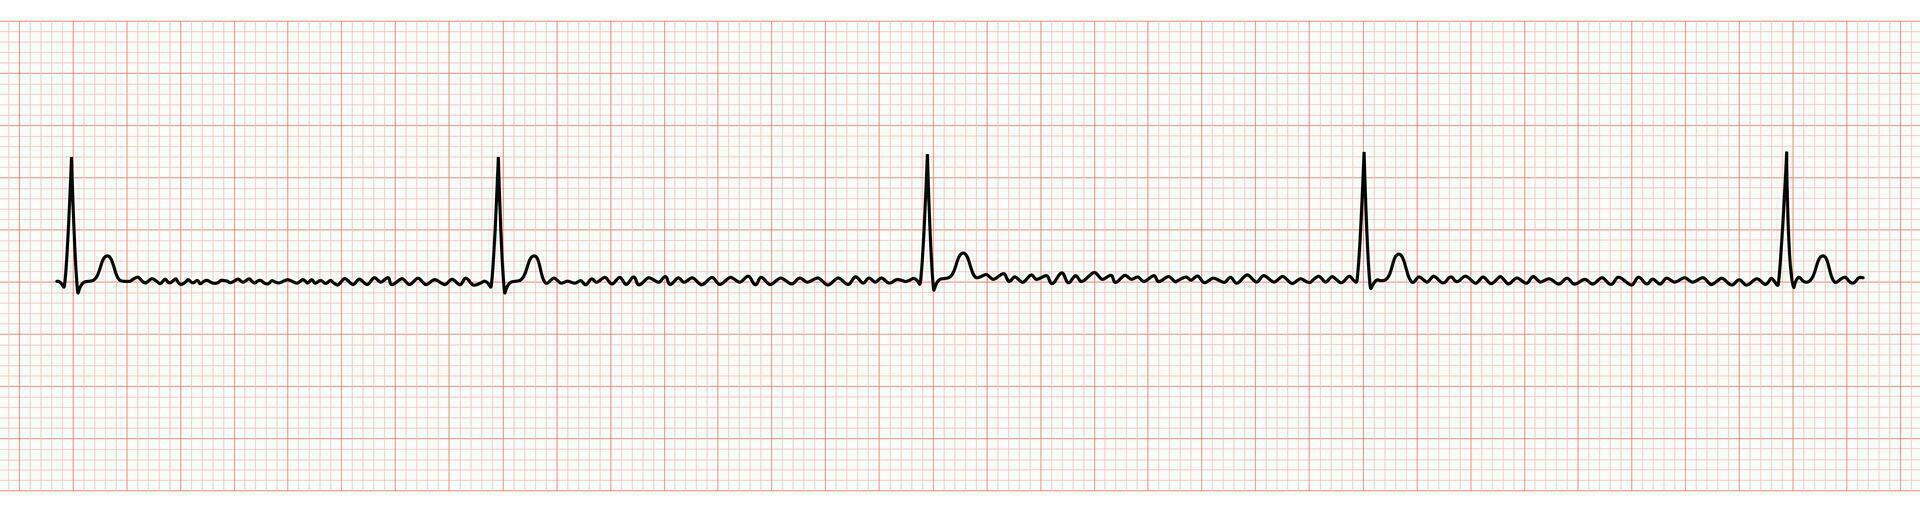 EKG Monitor Showing Regularized Atrial Fibrillation or AF with Block vector